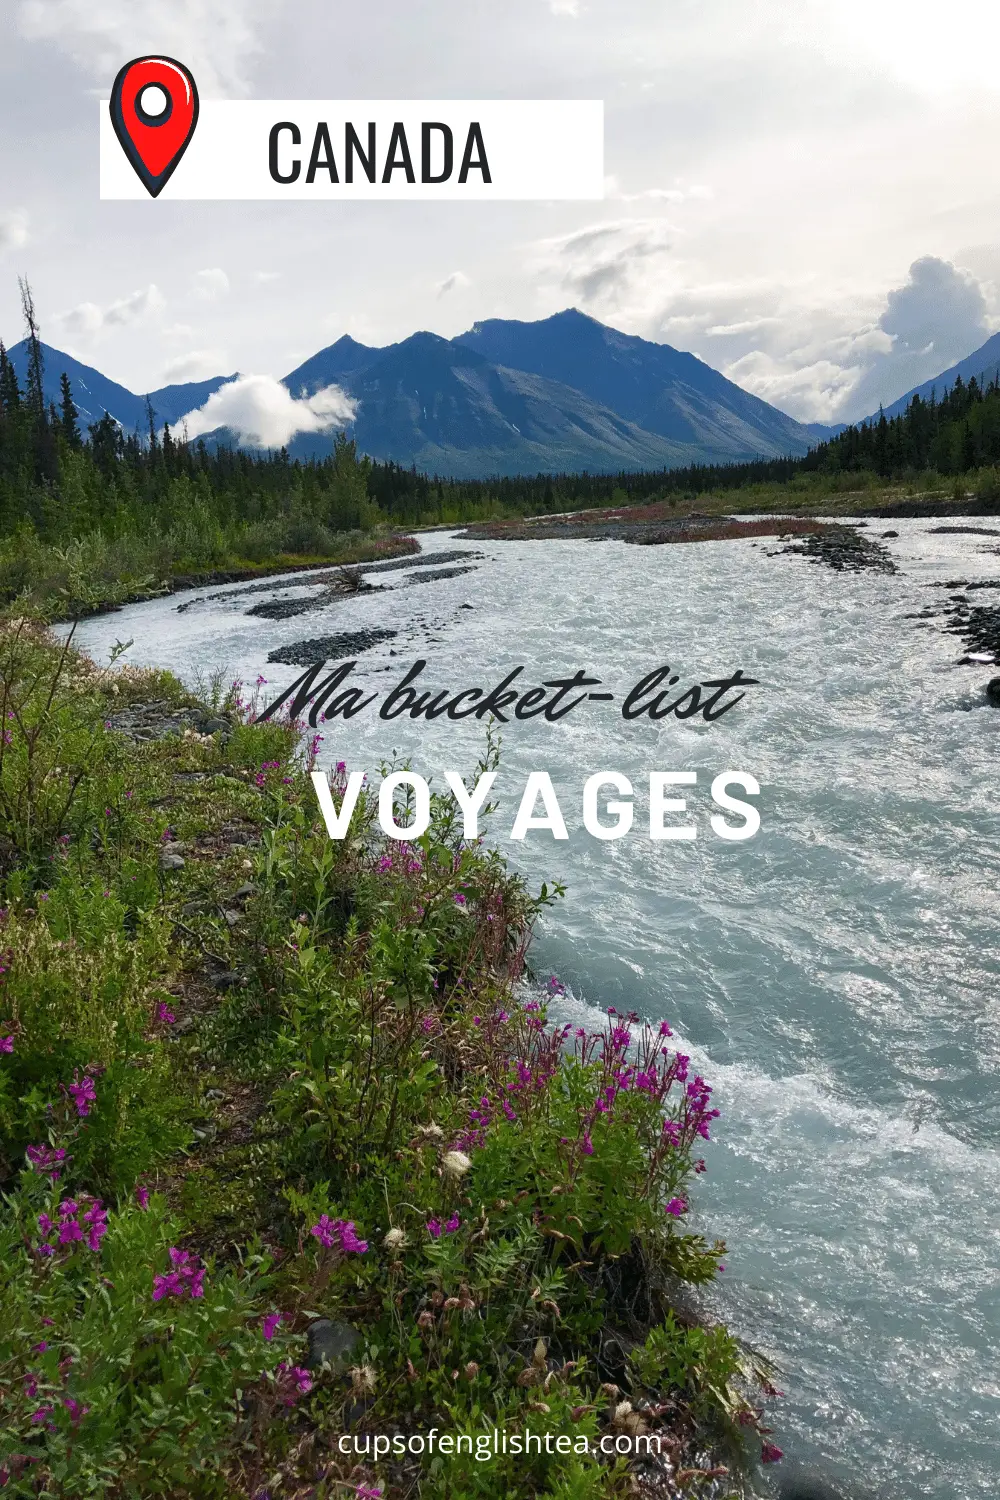 Canada Bucket list voyages